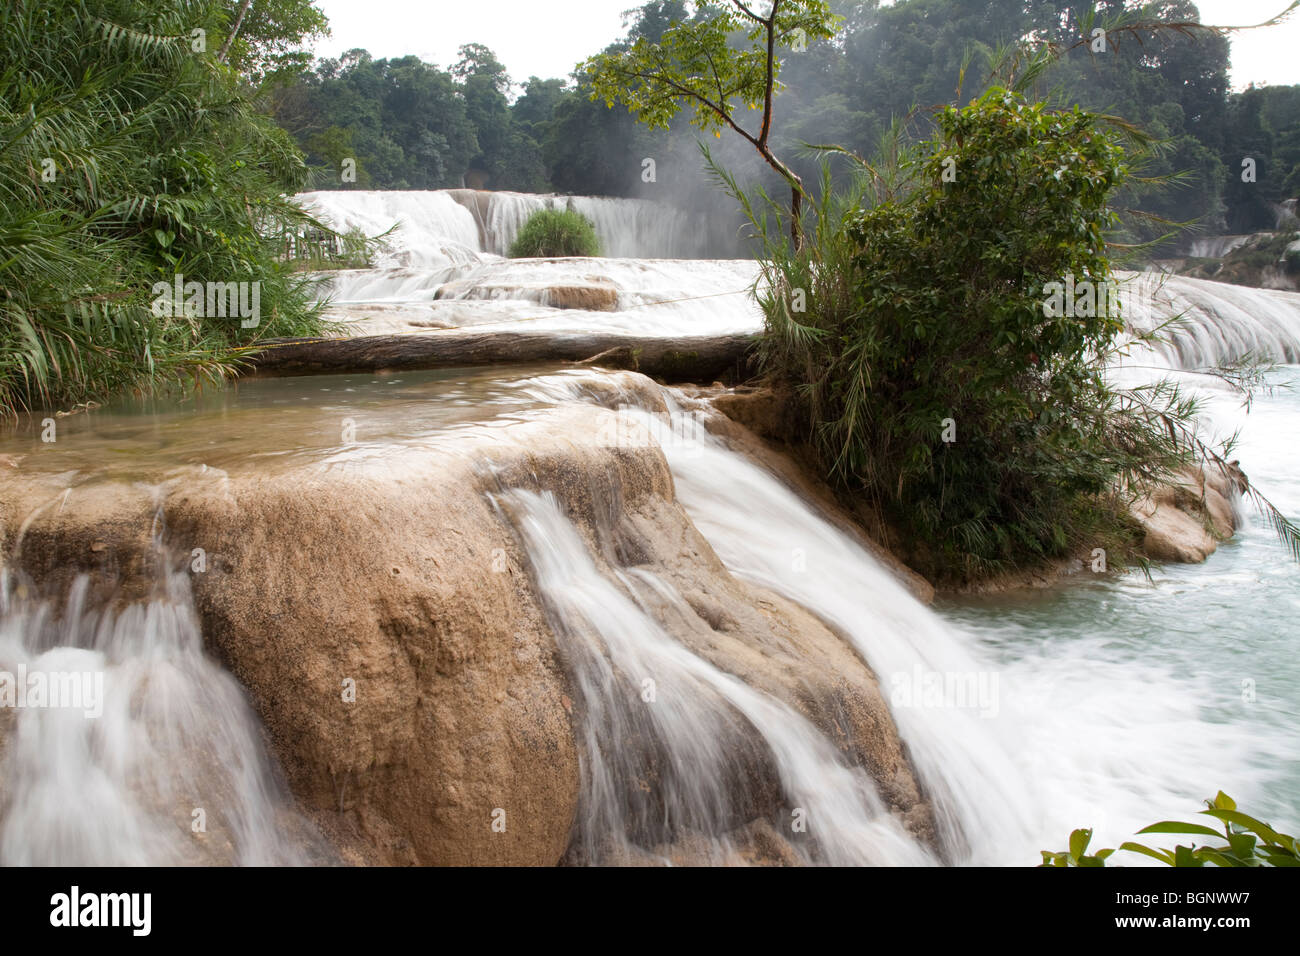 Agua Azul jungle waterfalls and rapids in Chiapas Mexico Stock Photo